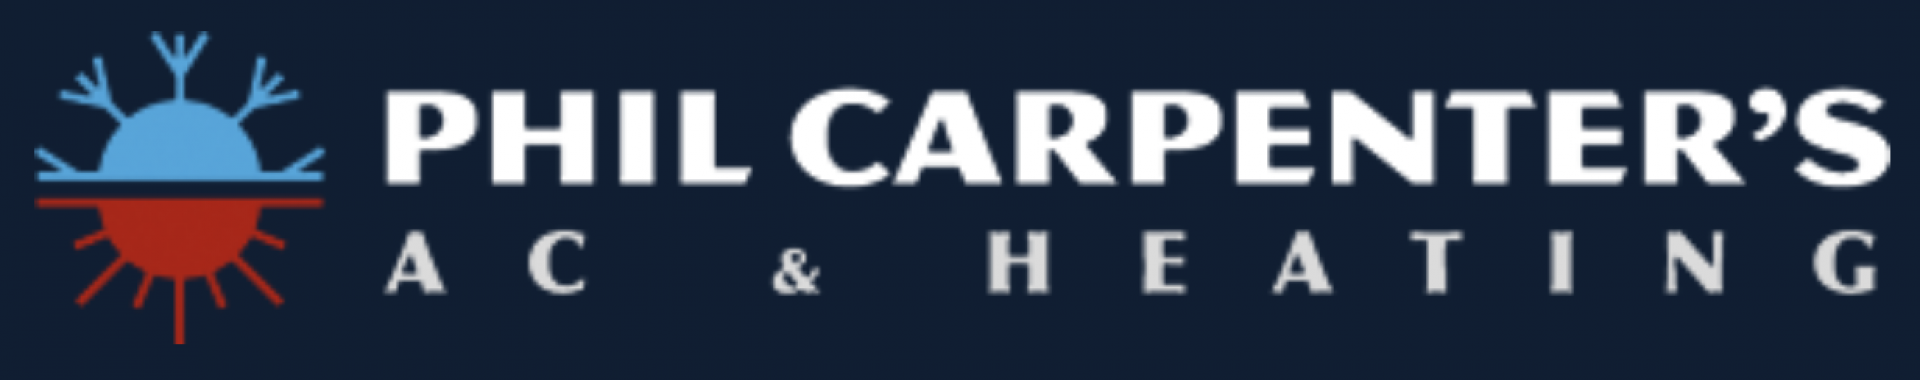 Phil Carpenter's A/C & Heating company logo